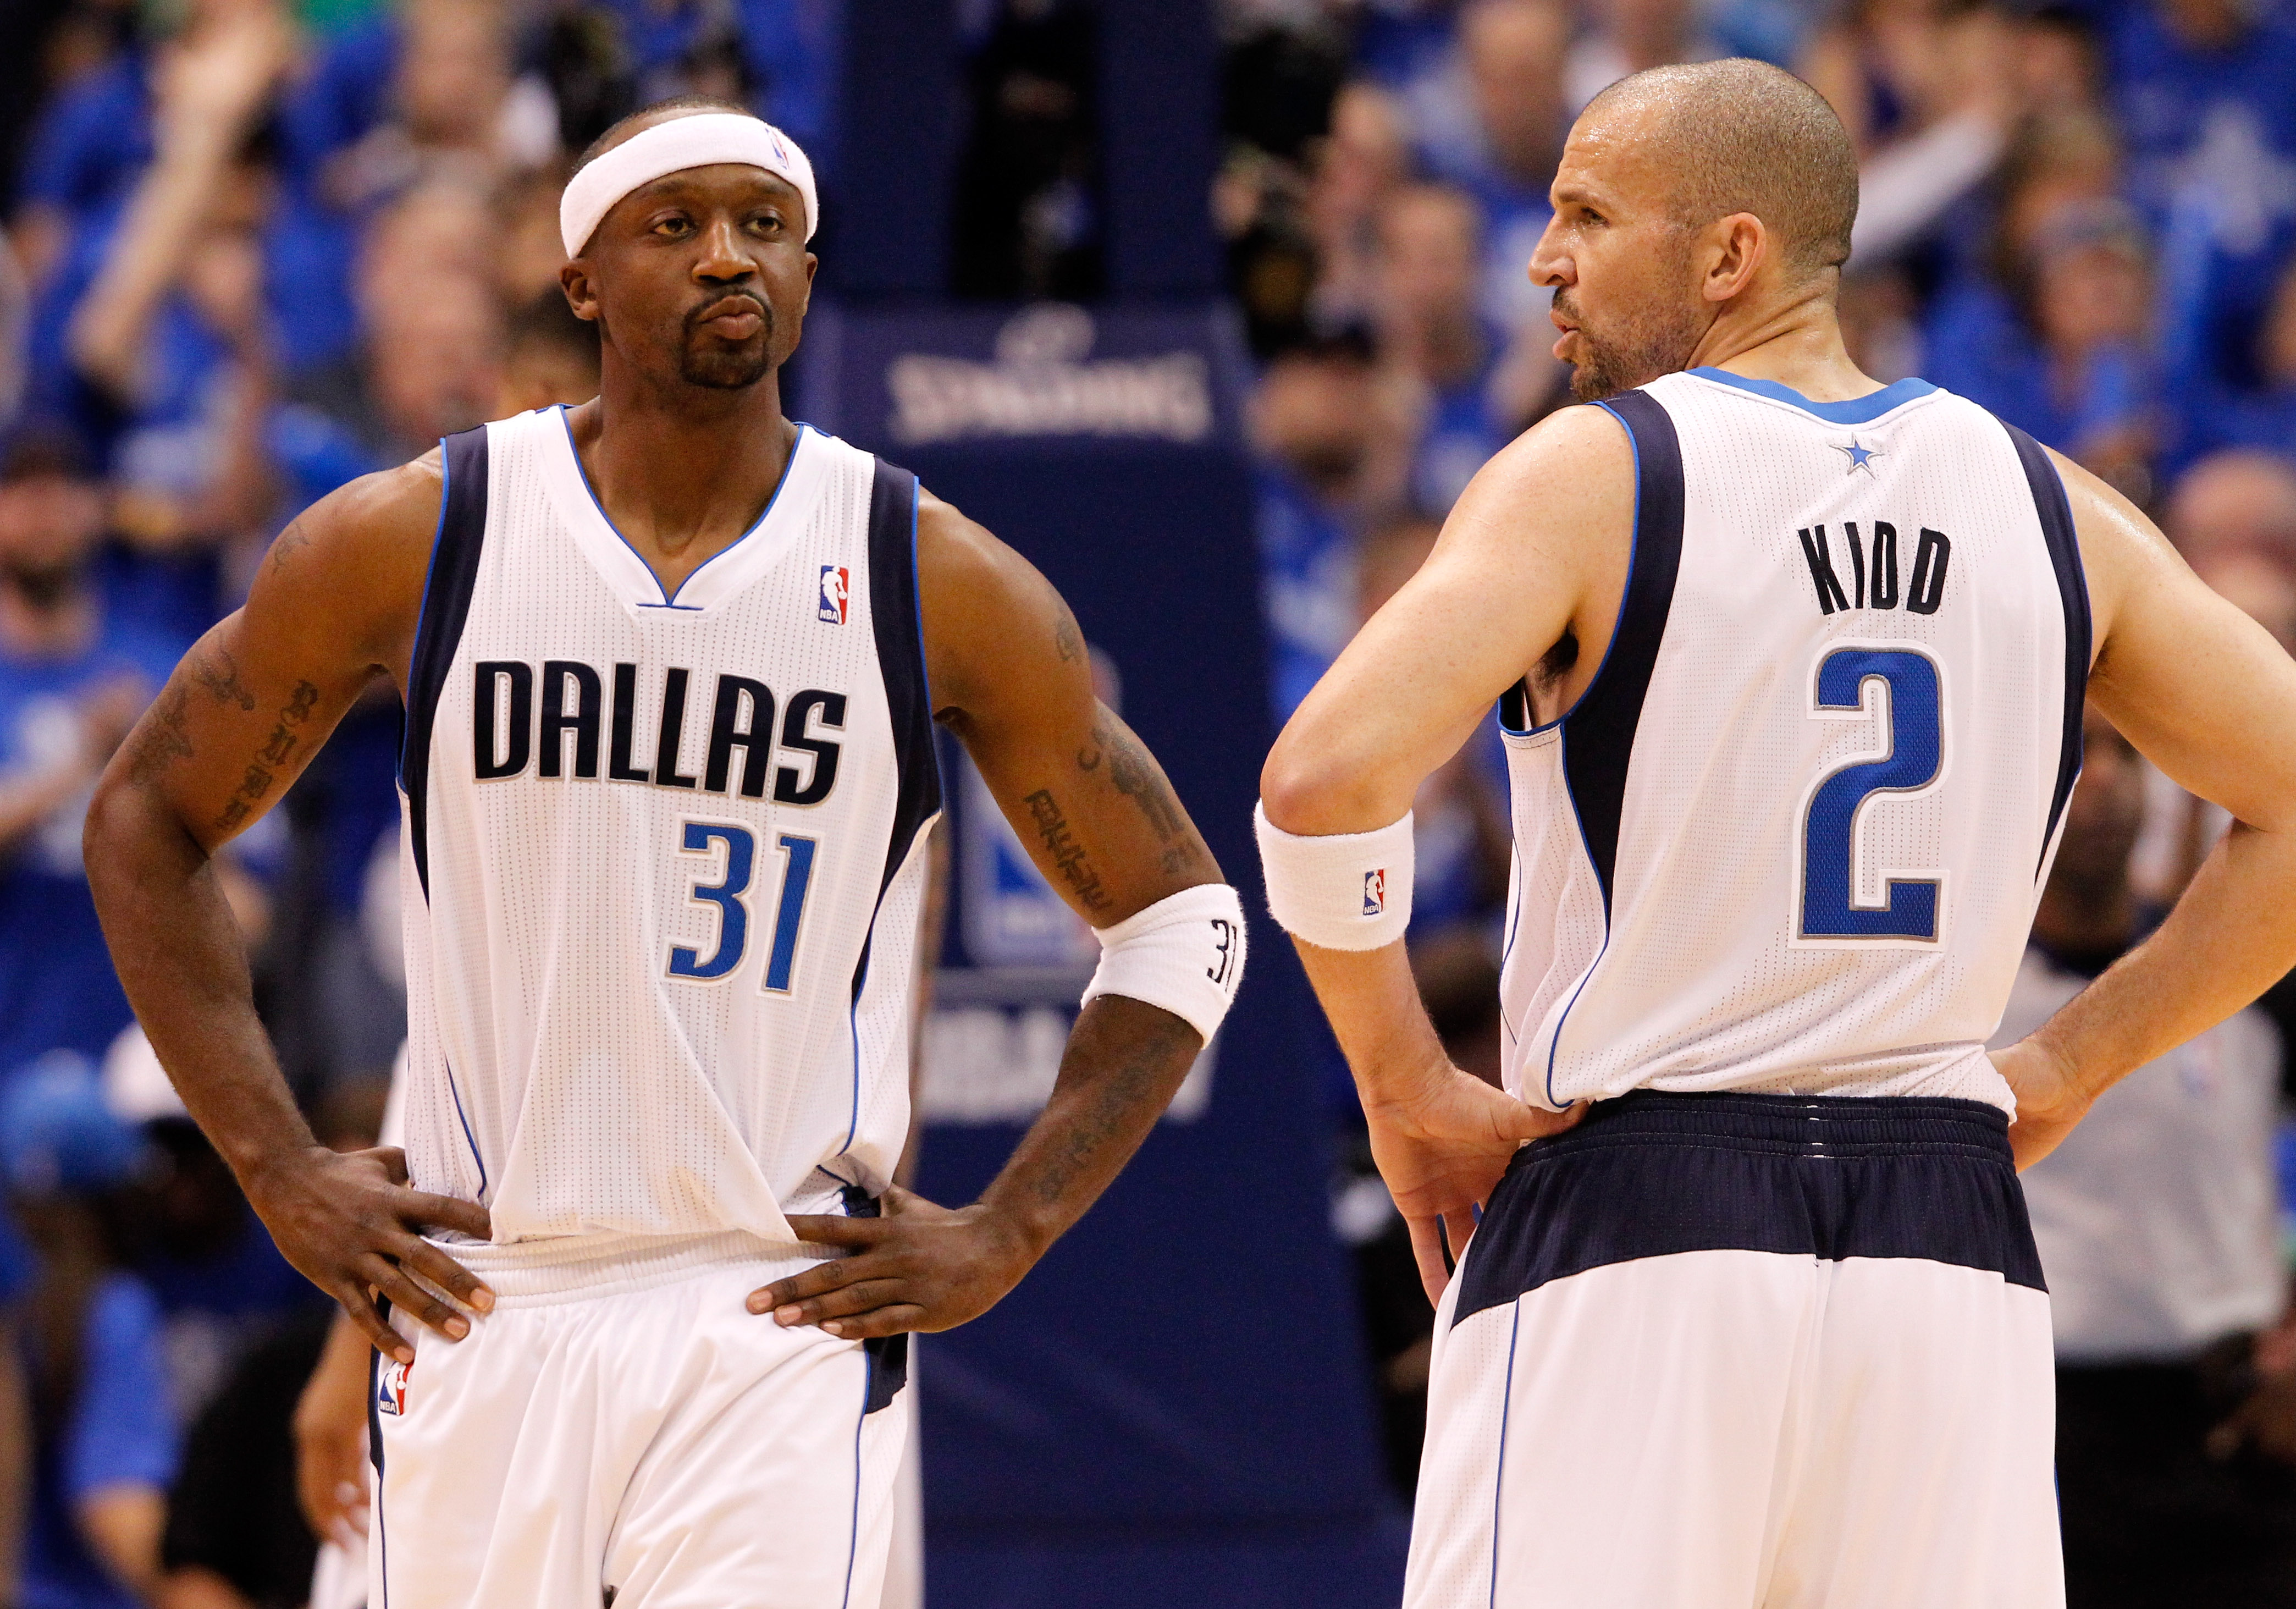 L-R: Dallas Mavericks teammates Jason Terry and Jason Kidd react during the 2011 NBA Playoffs